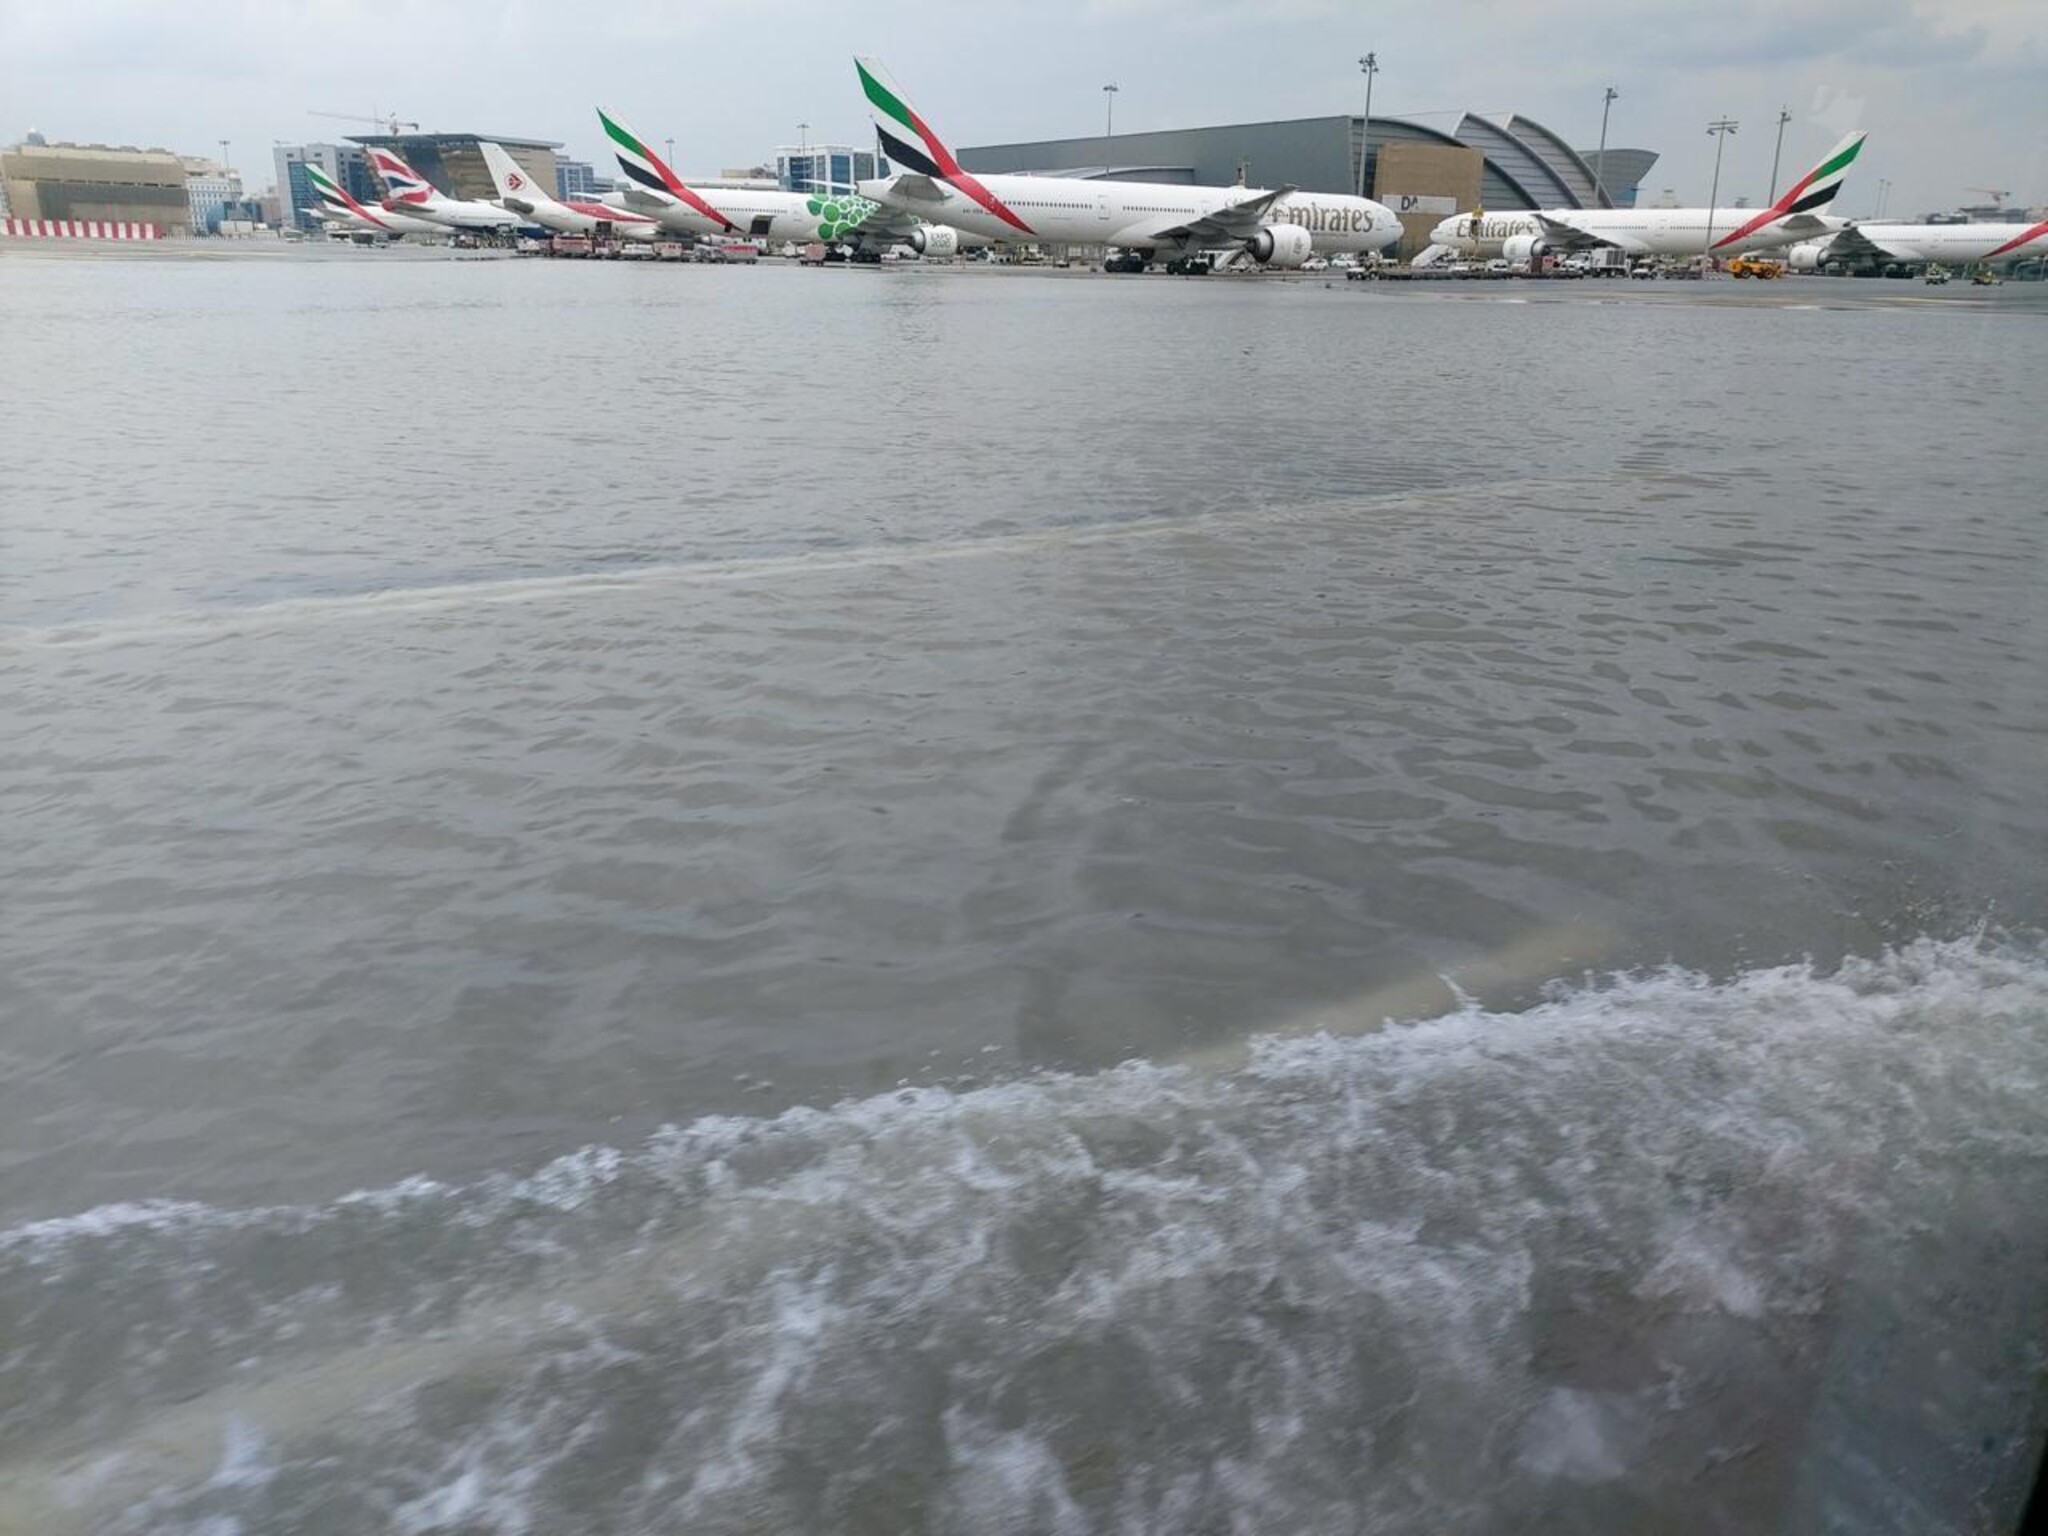 UAE Storm: Emirates Airlines canceled some flights